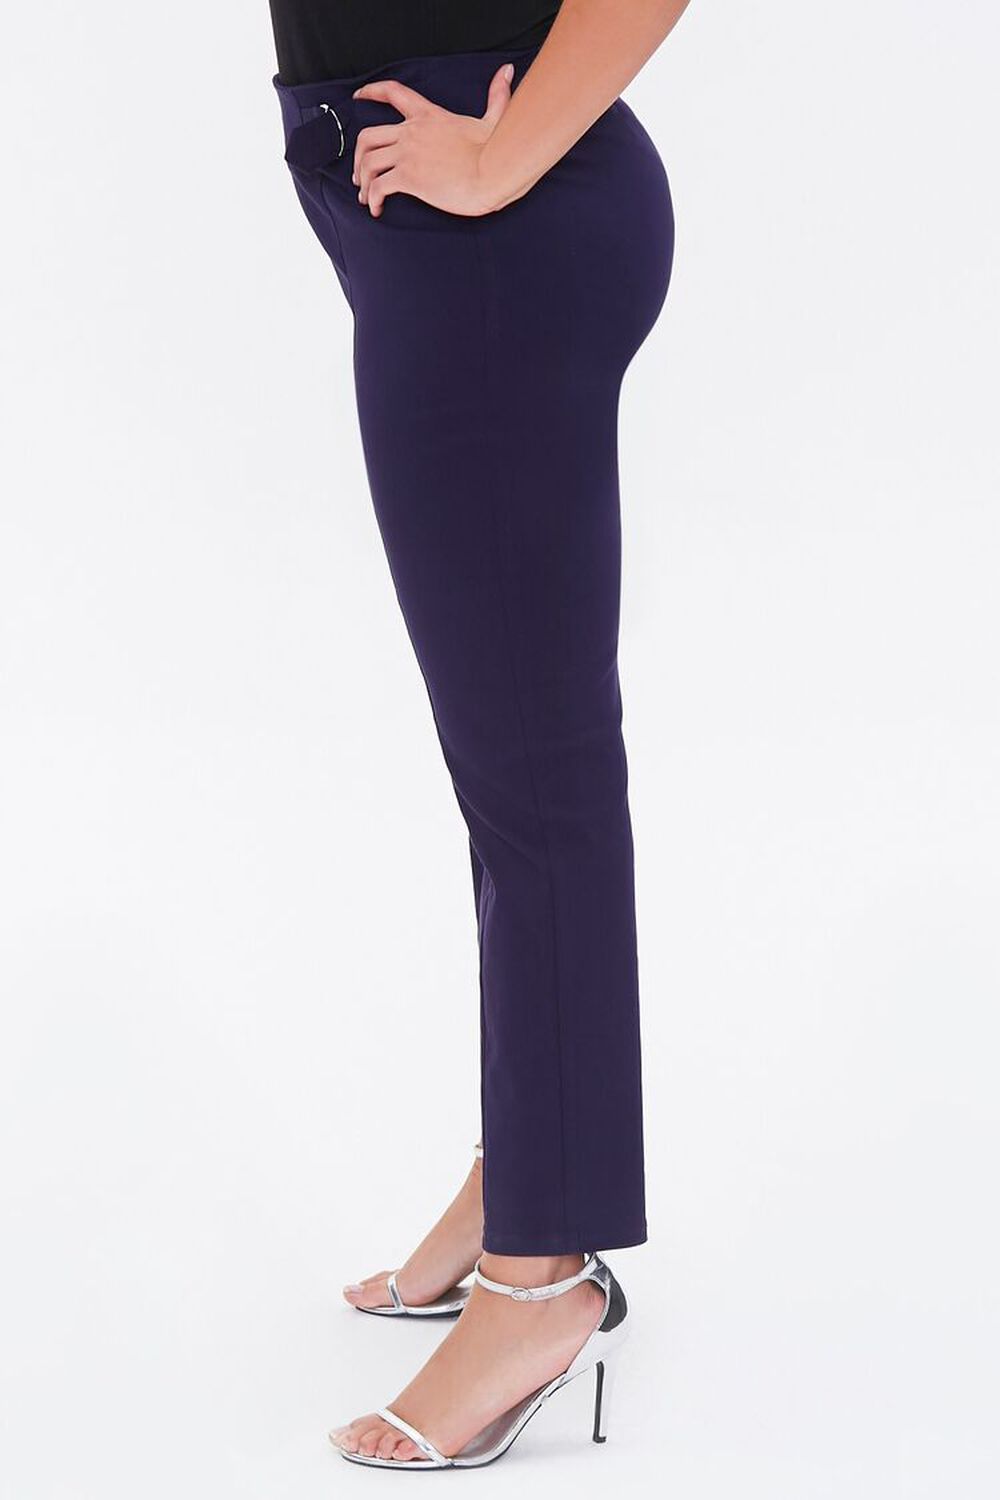 NAVY Plus Size Skinny Waist-Tab Ankle Pants, image 3